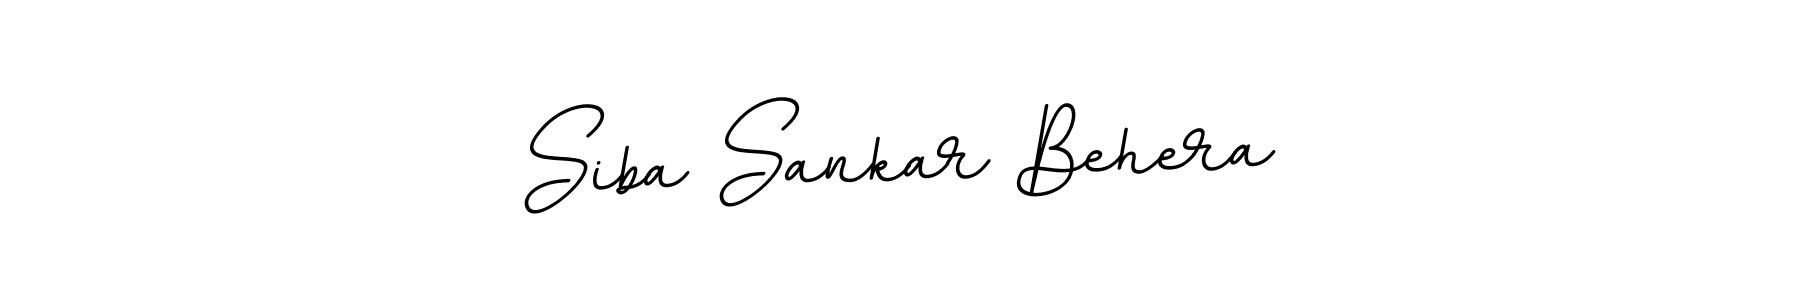 How to Draw Siba Sankar Behera signature style? BallpointsItalic-DORy9 is a latest design signature styles for name Siba Sankar Behera. Siba Sankar Behera signature style 11 images and pictures png